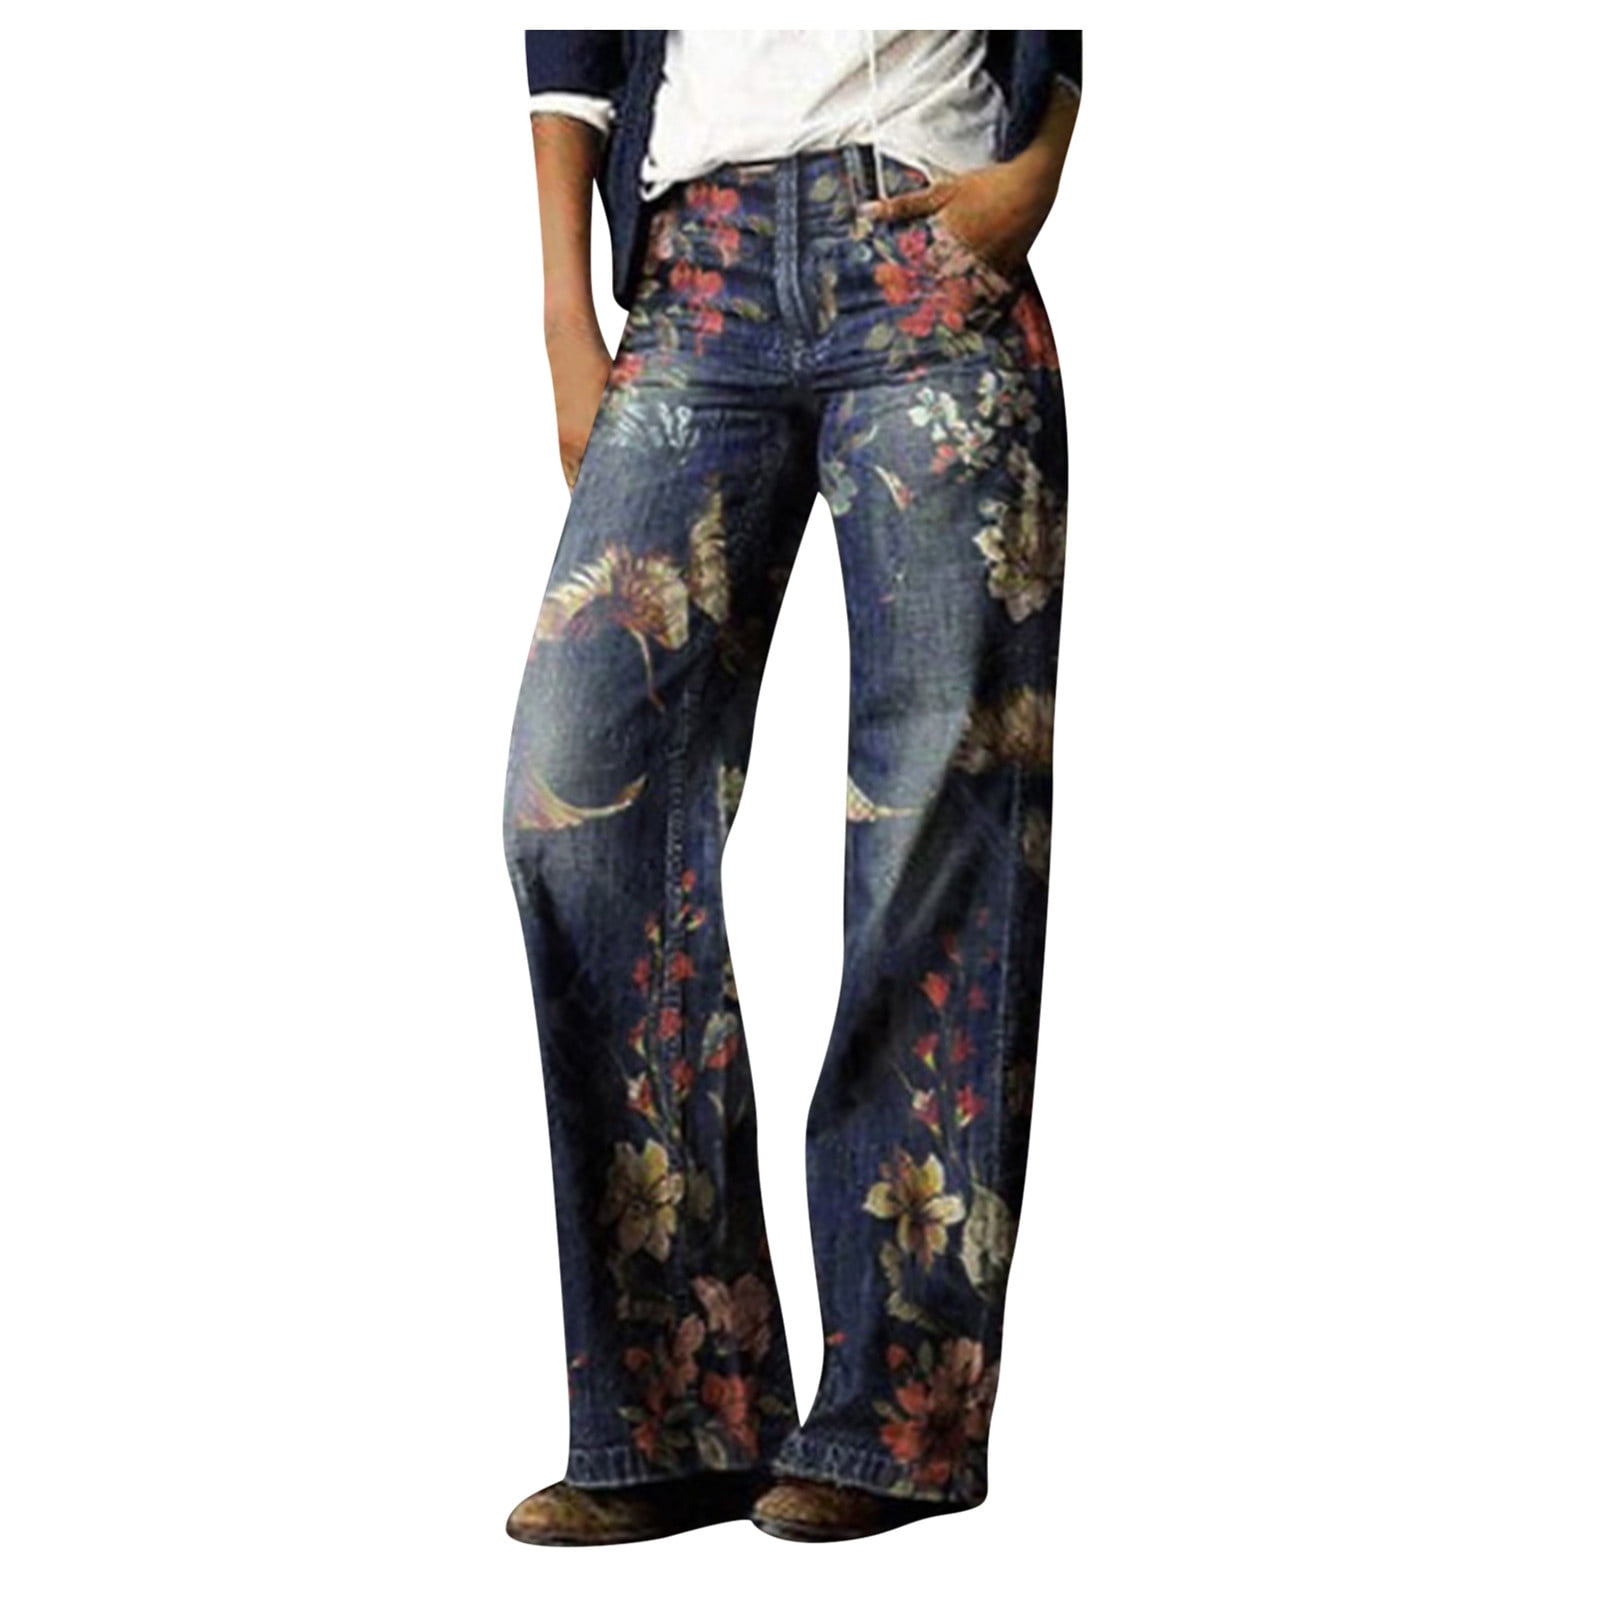 Women Fashion Printed Jeans Casual Long Pants - Walmart.com